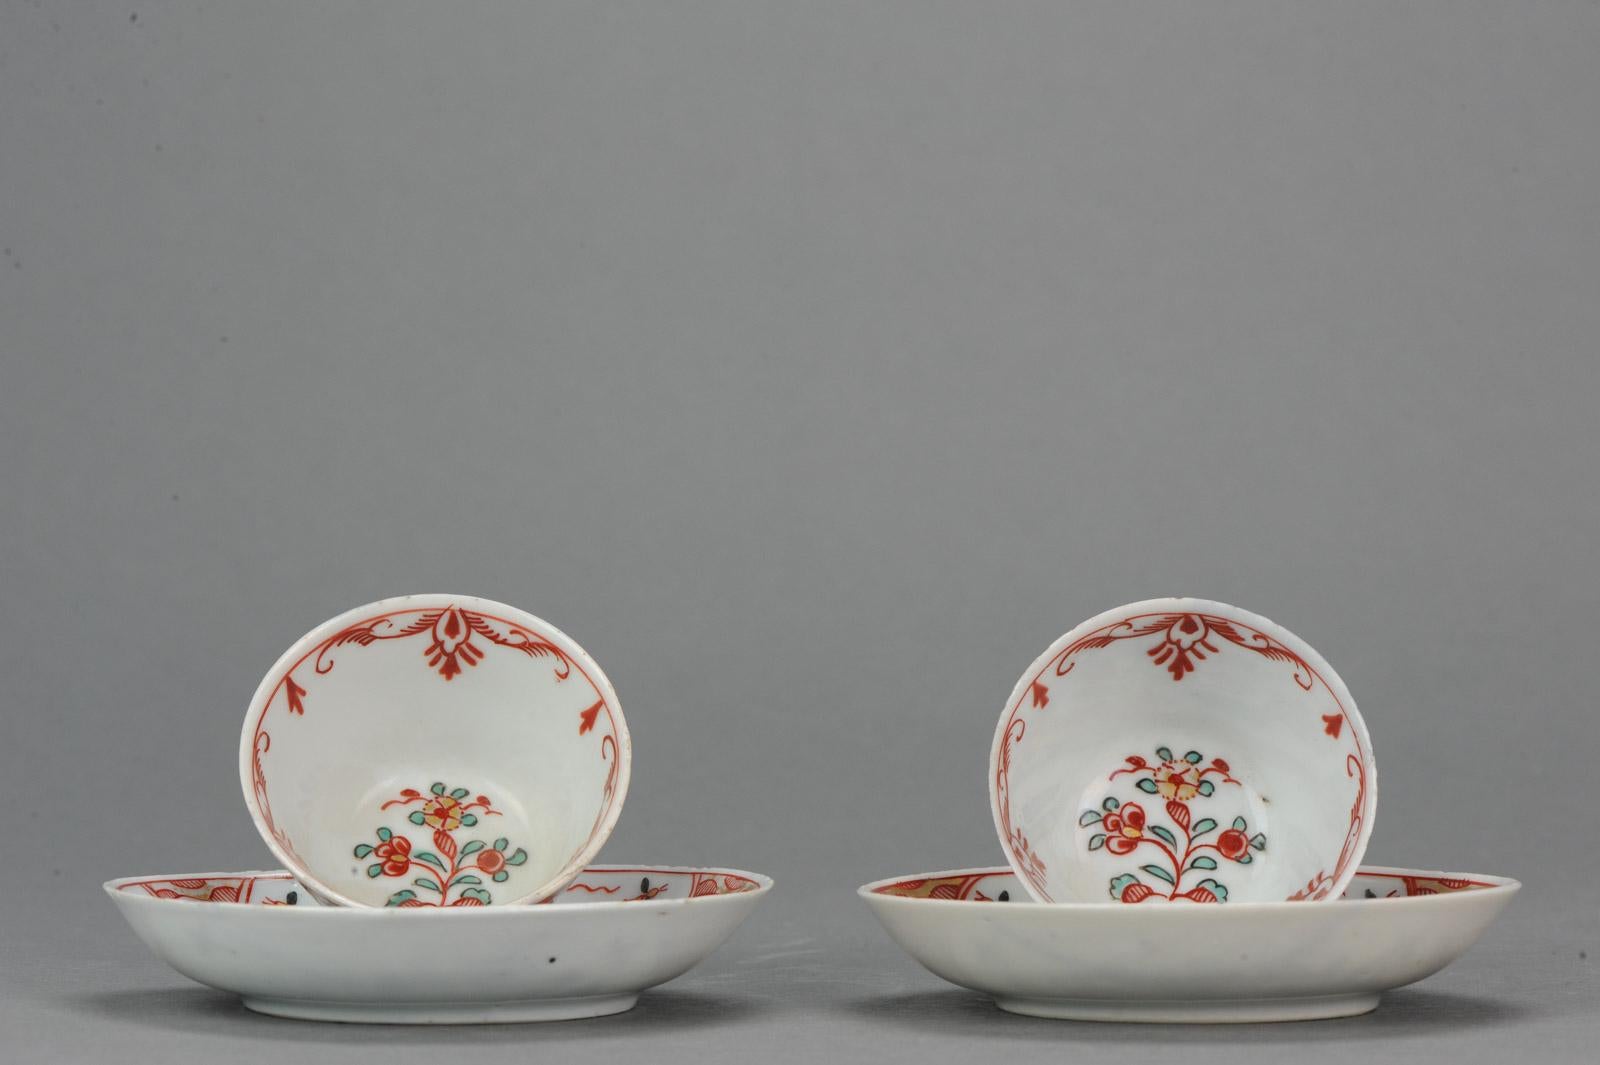 Set of 2 Antique Chinese Porcelain Tea Bowl Cup Saucer Amsterdam Bont, 18th Cen For Sale 1